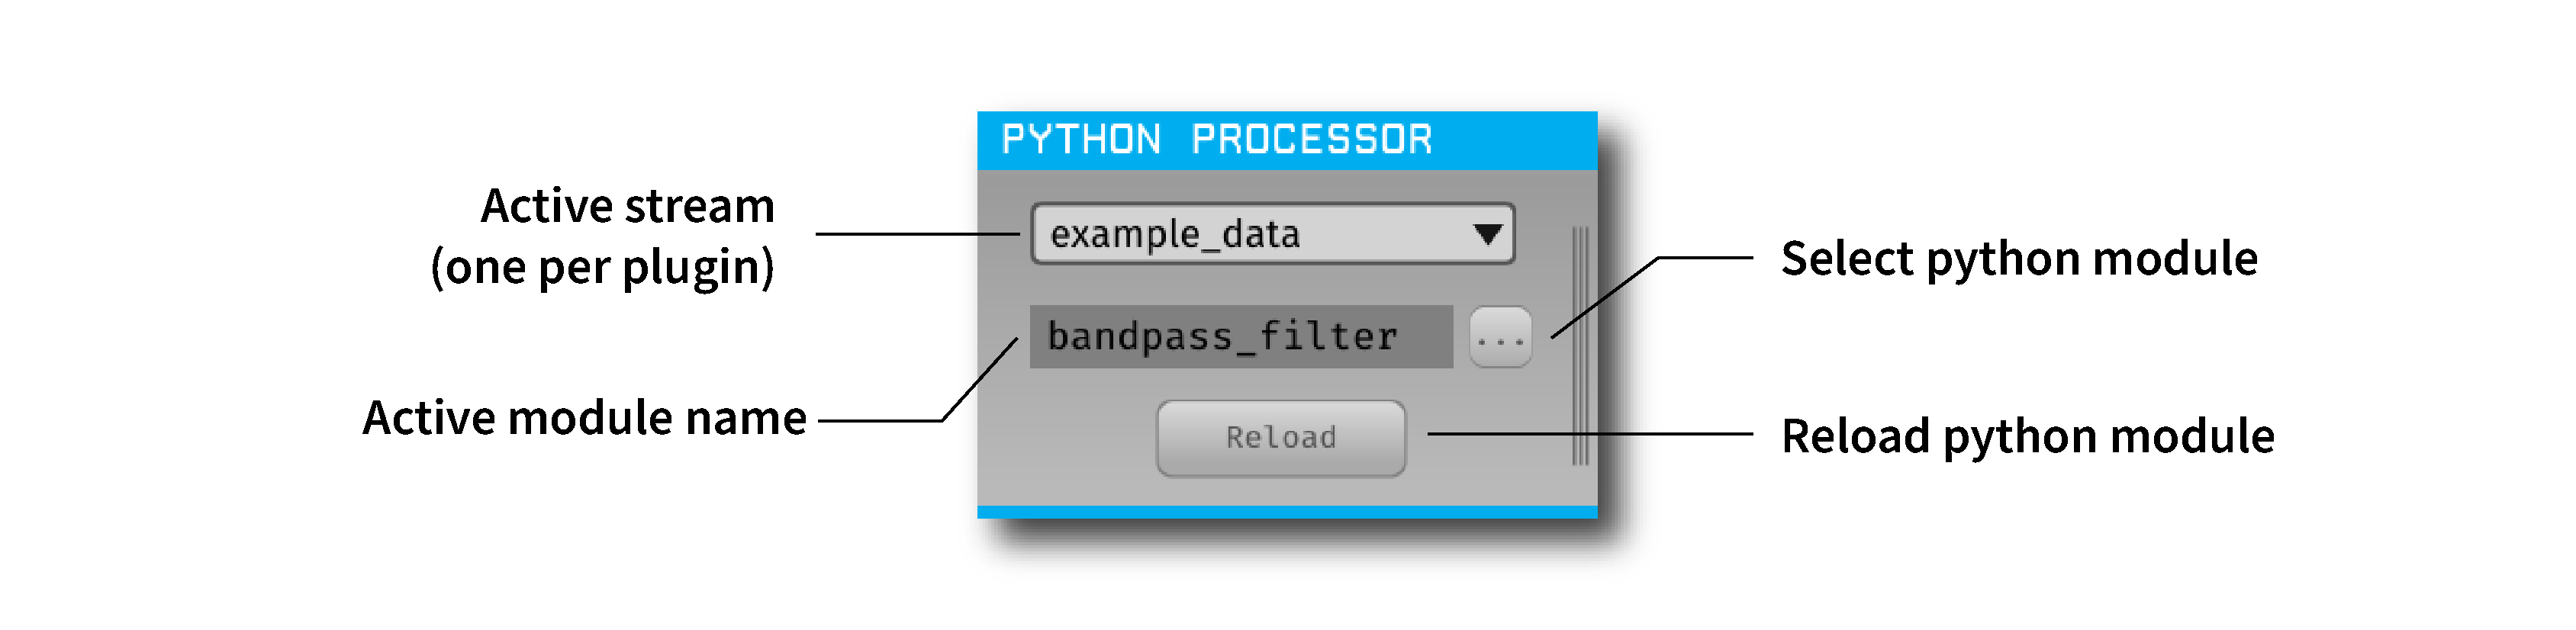 Annotated Python Processor editor